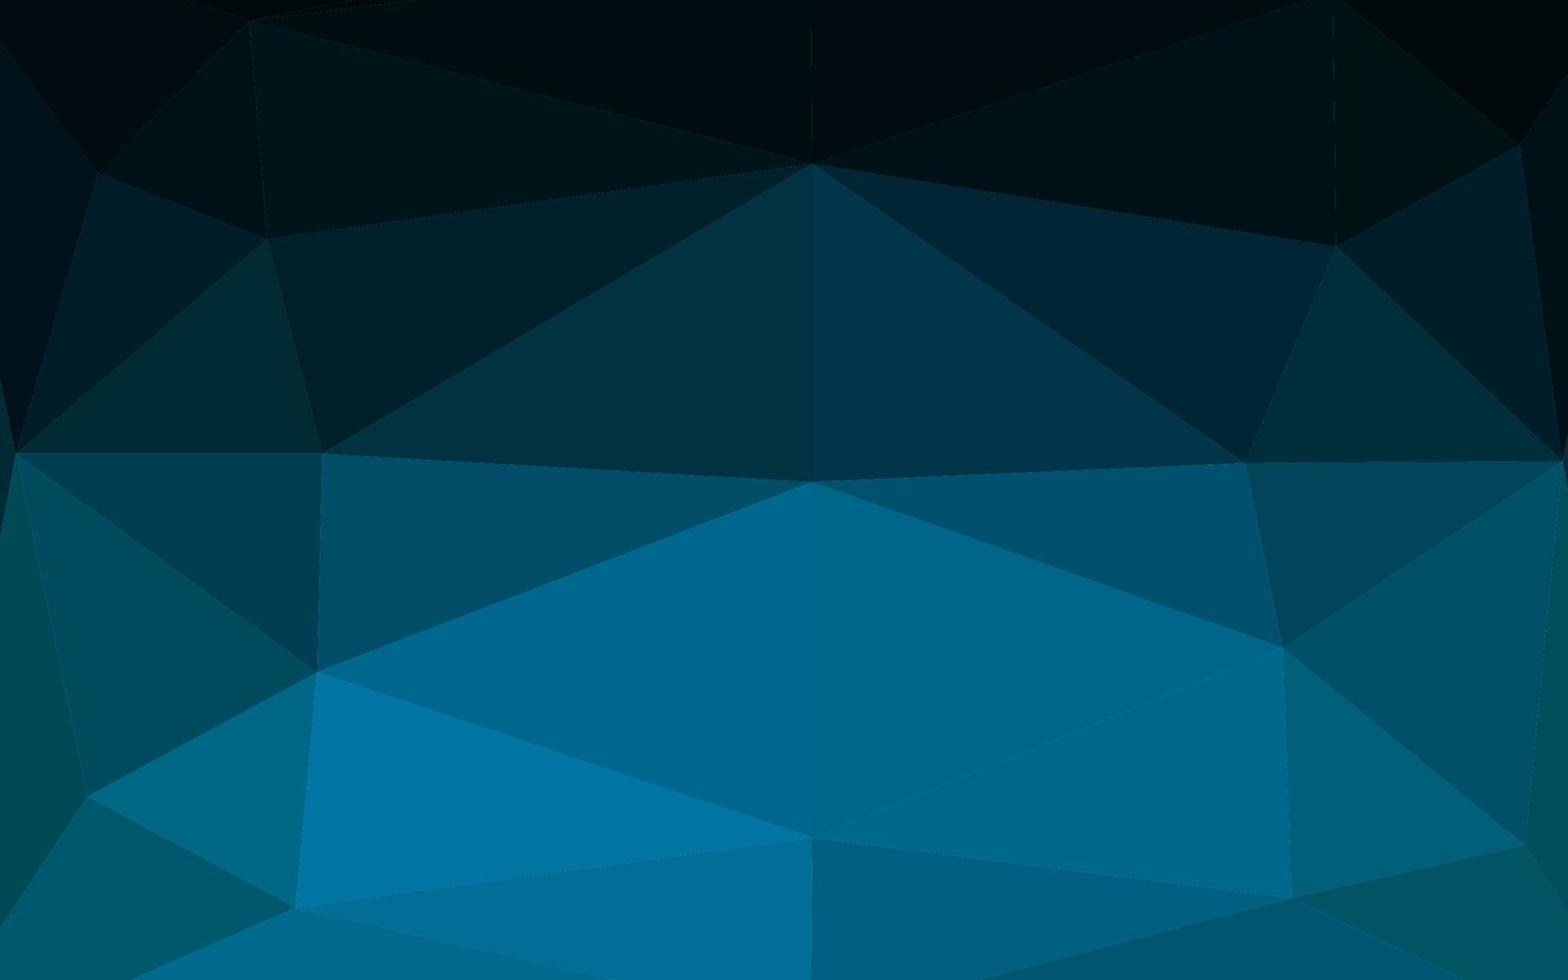 lichtblauwe vector driehoek mozaïek sjabloon.